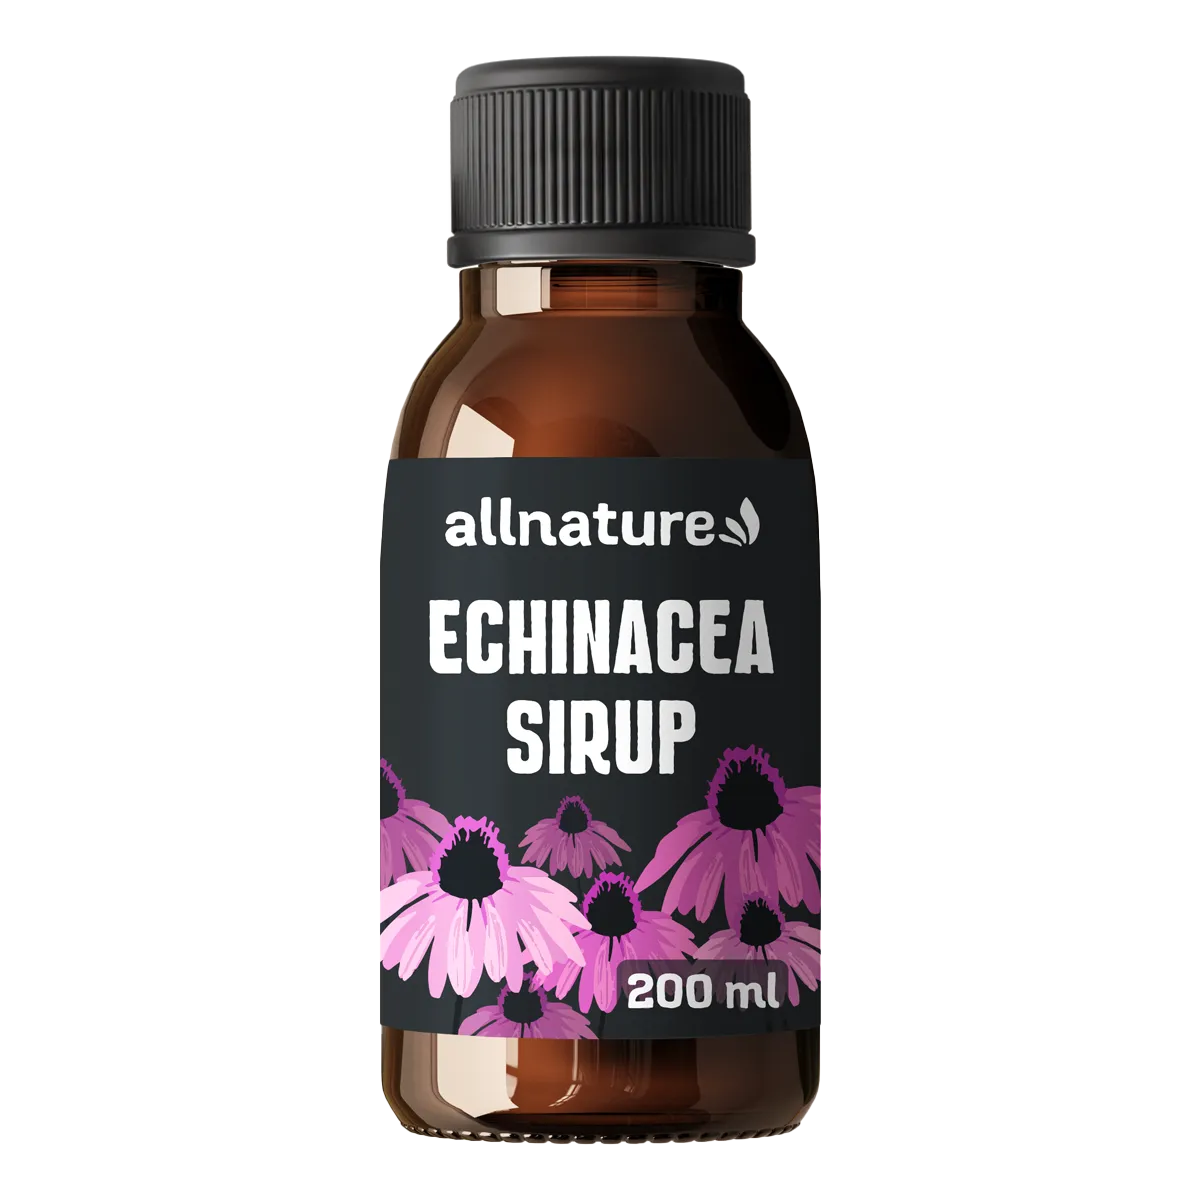 Allnature Echinacea sirup 200 ml